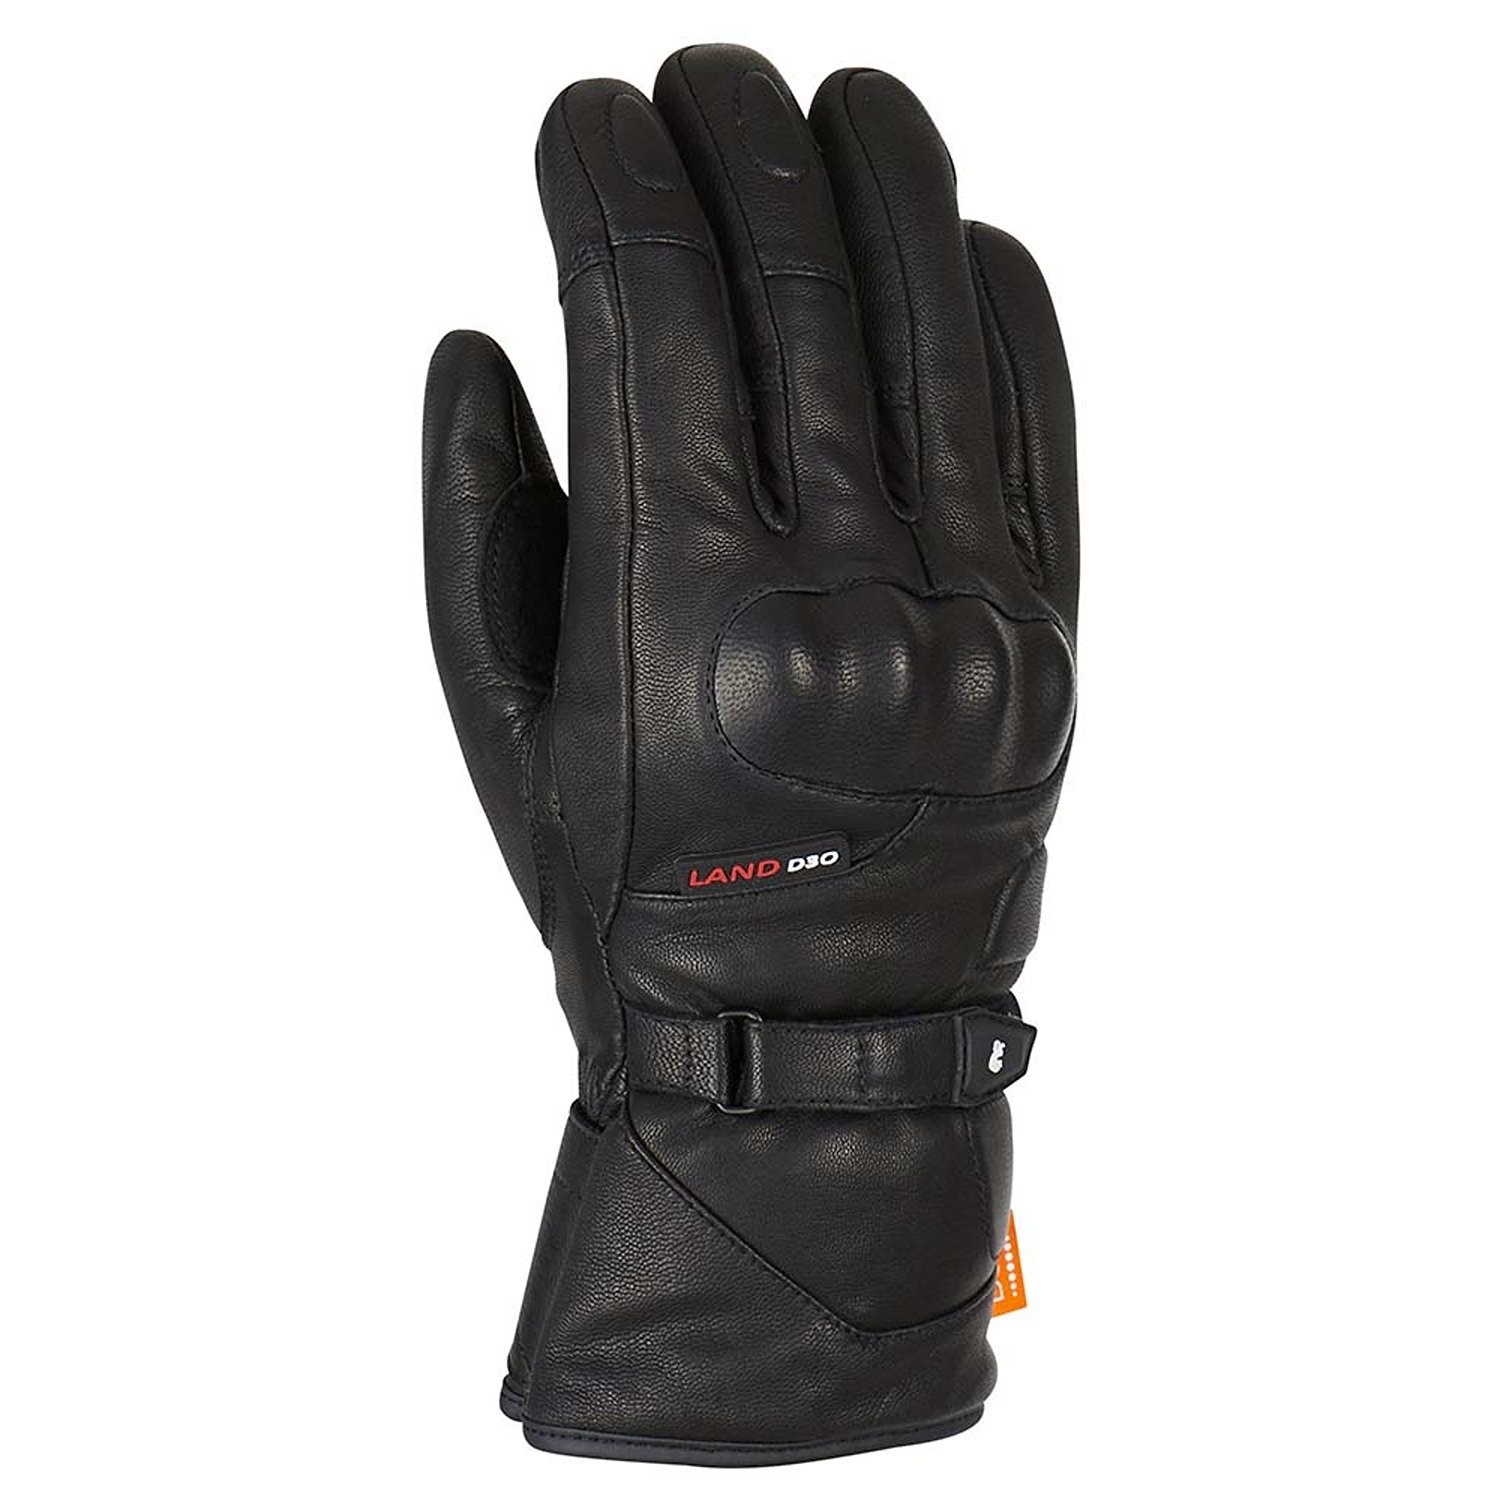 Image of EU Furygan Land DK D30 Gloves Black Taille S